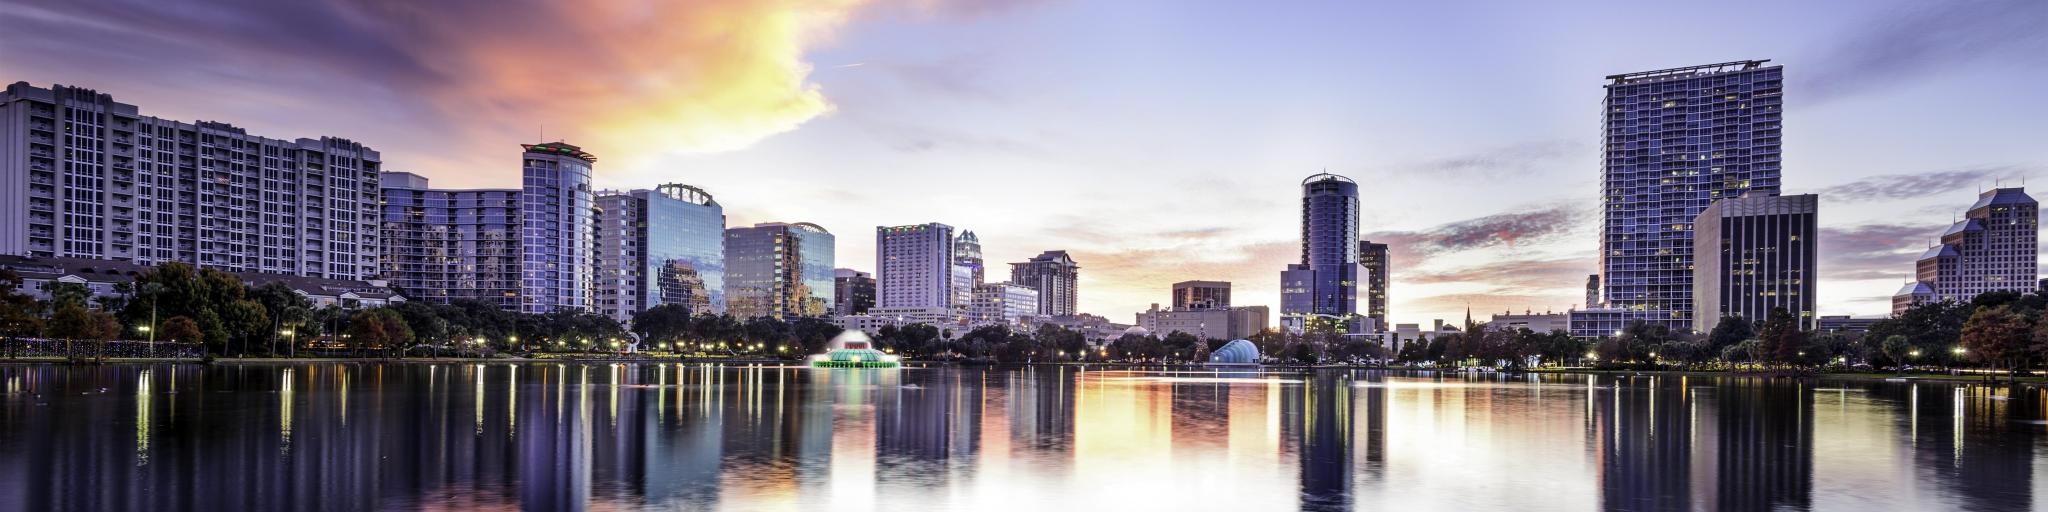 Orlando, Florida, USA downtown city skyline at Lake Eola.